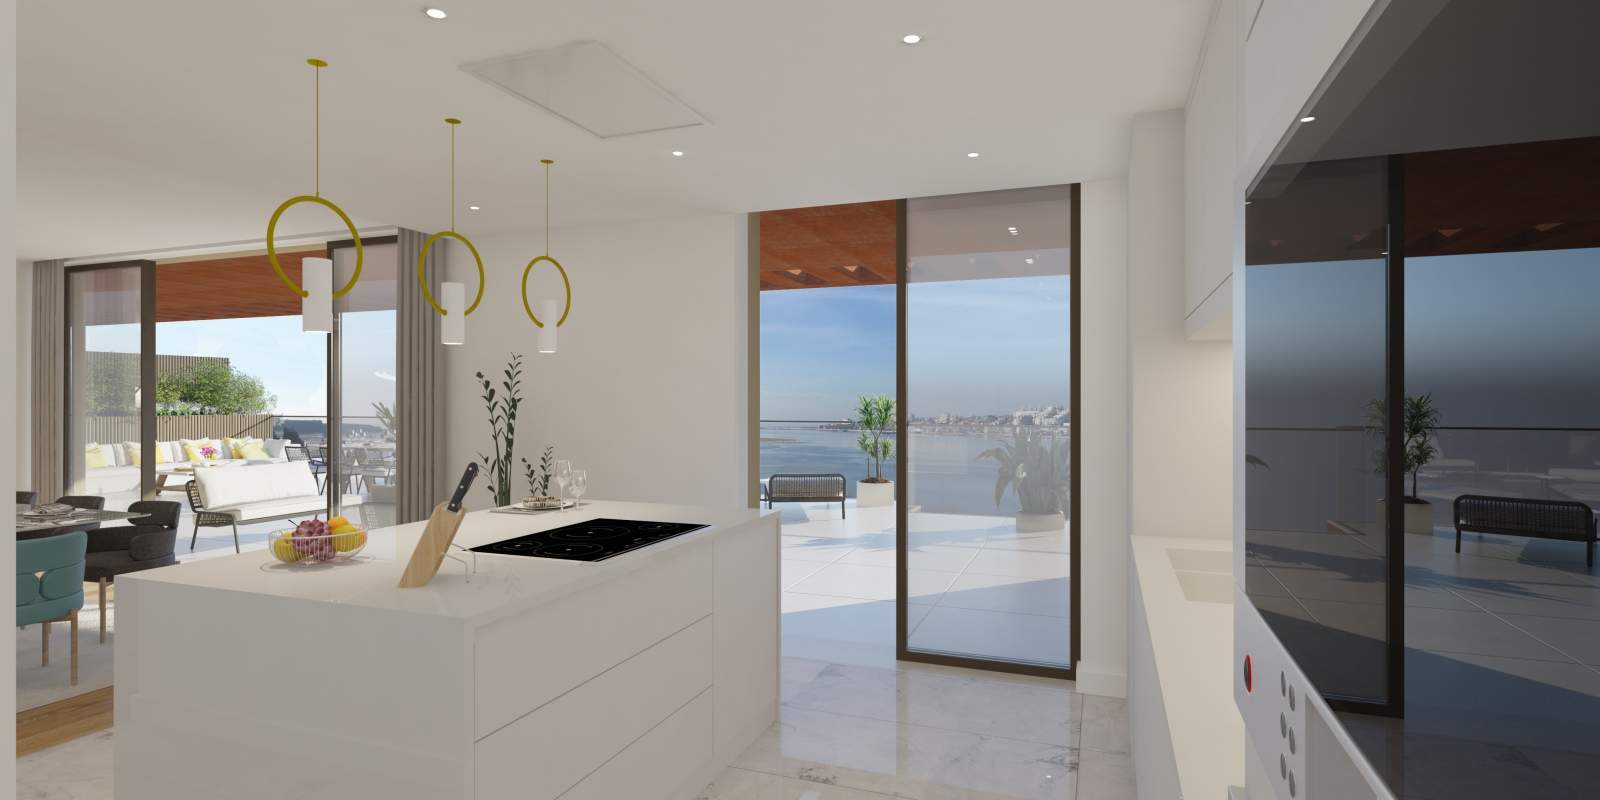 Apartment for sale with terrace, in exclusive condominium, V. N. Gaia, Porto, Portugal_175814